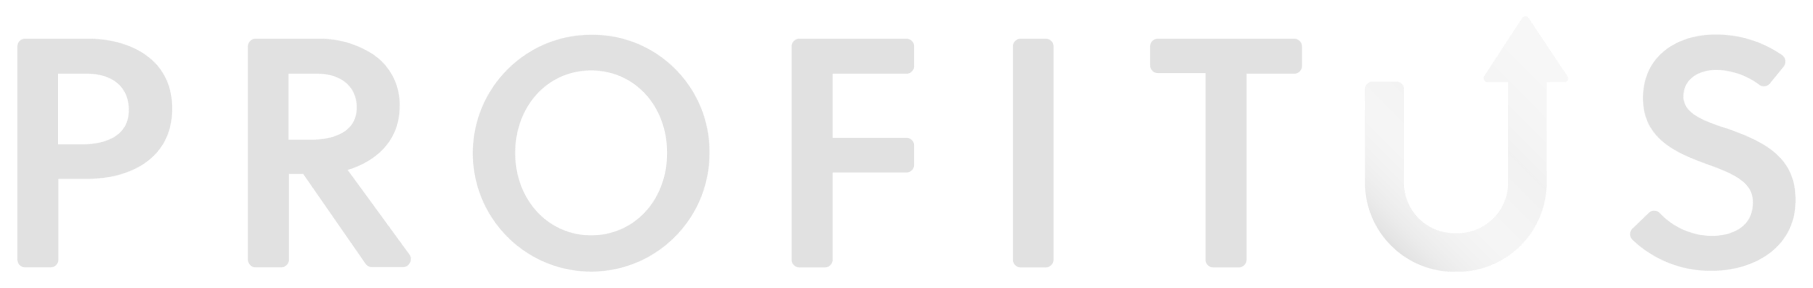 member-logo